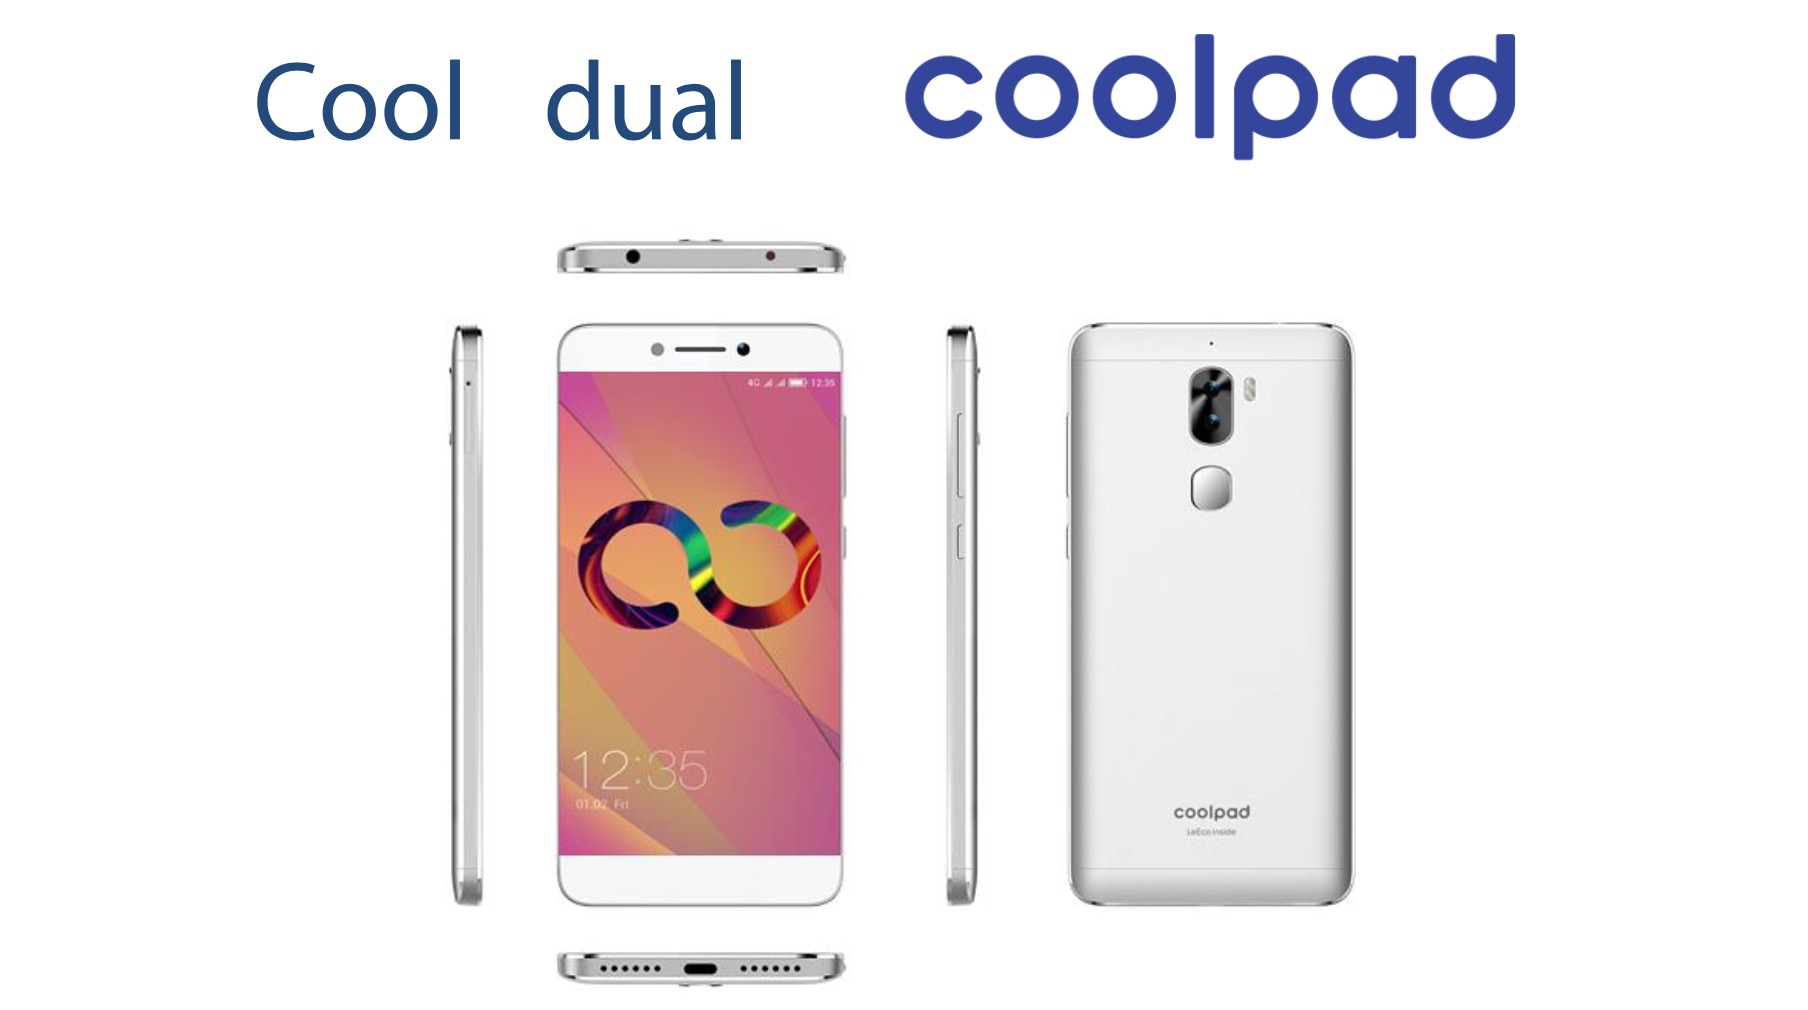 Coolpad Cool Dual ra mắt, camera kép, Snapdragon 652, 3GB RAM, pin 4060 mAh